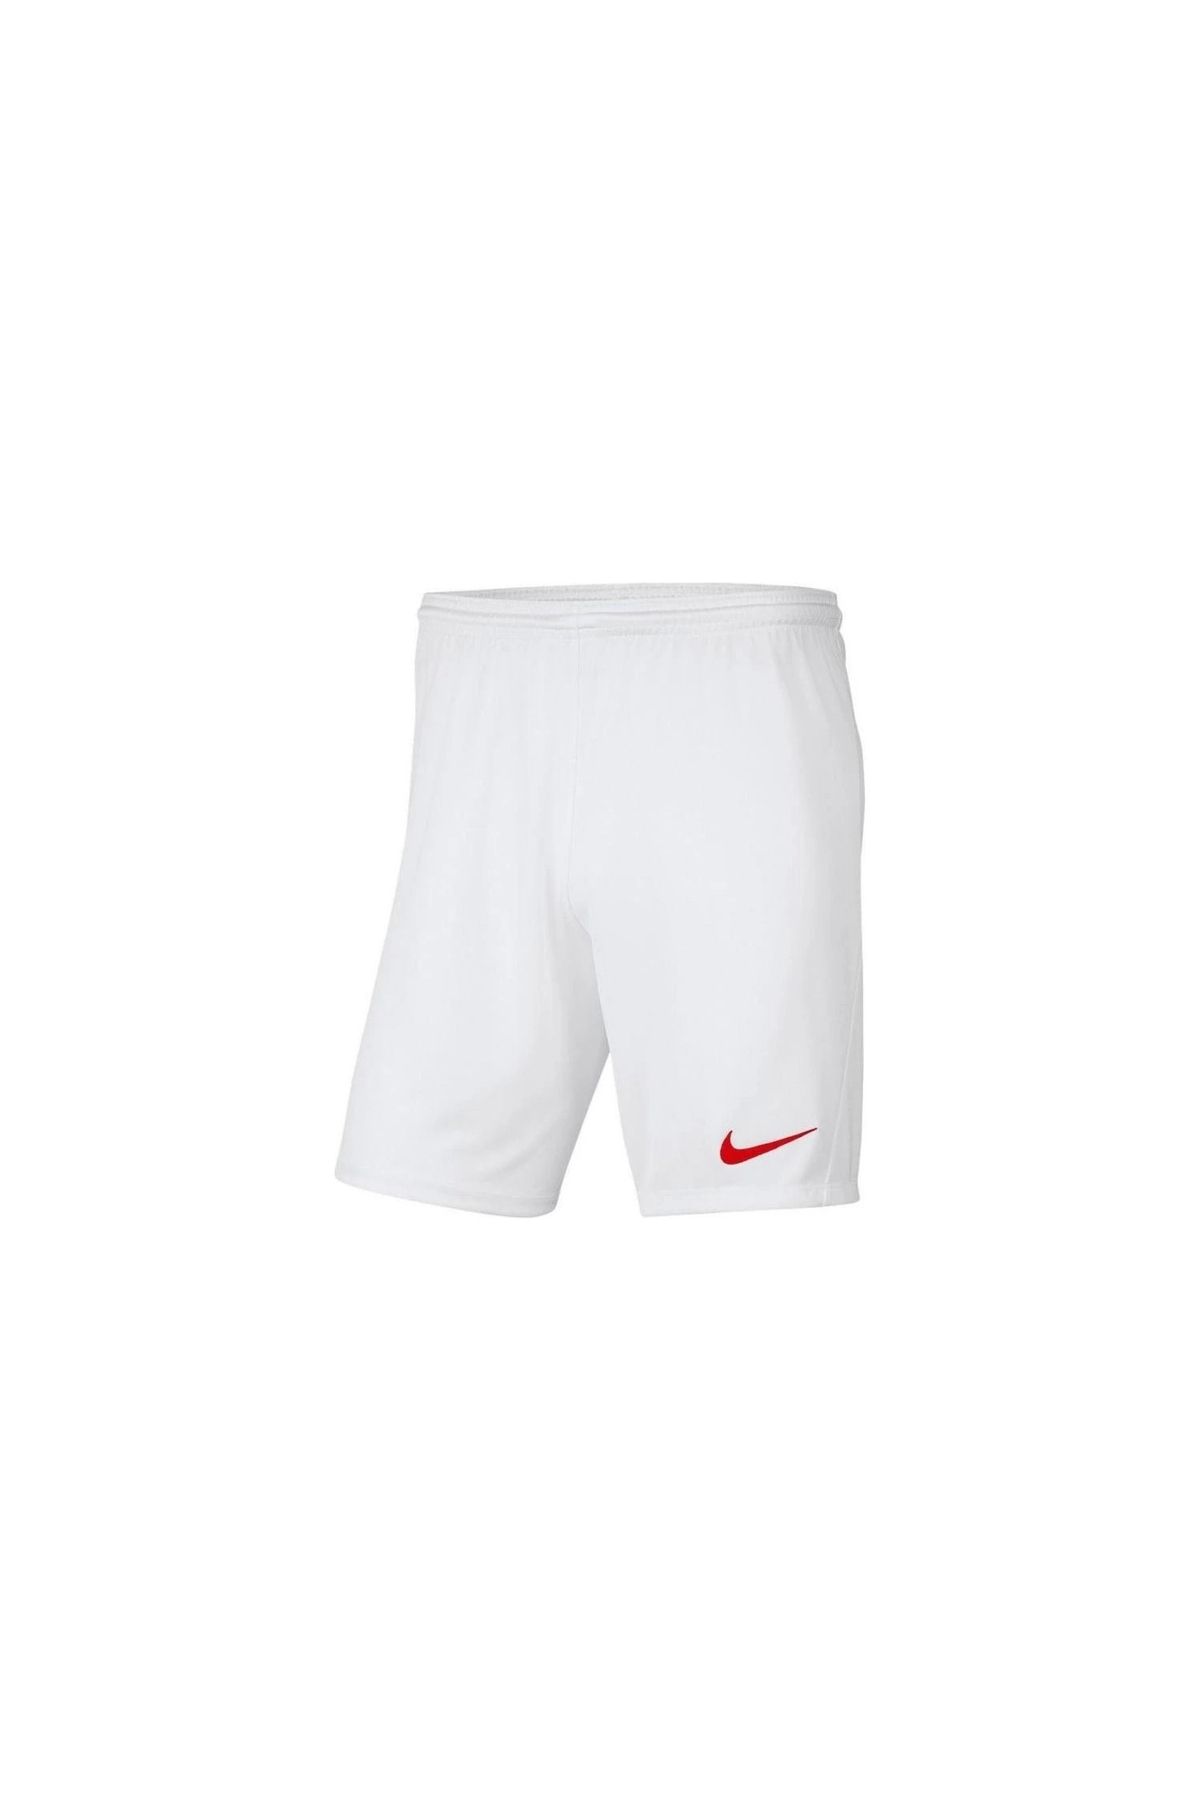 Nike Dry Park III Erkek Beyaz Futbol Şortu BV6855-0103